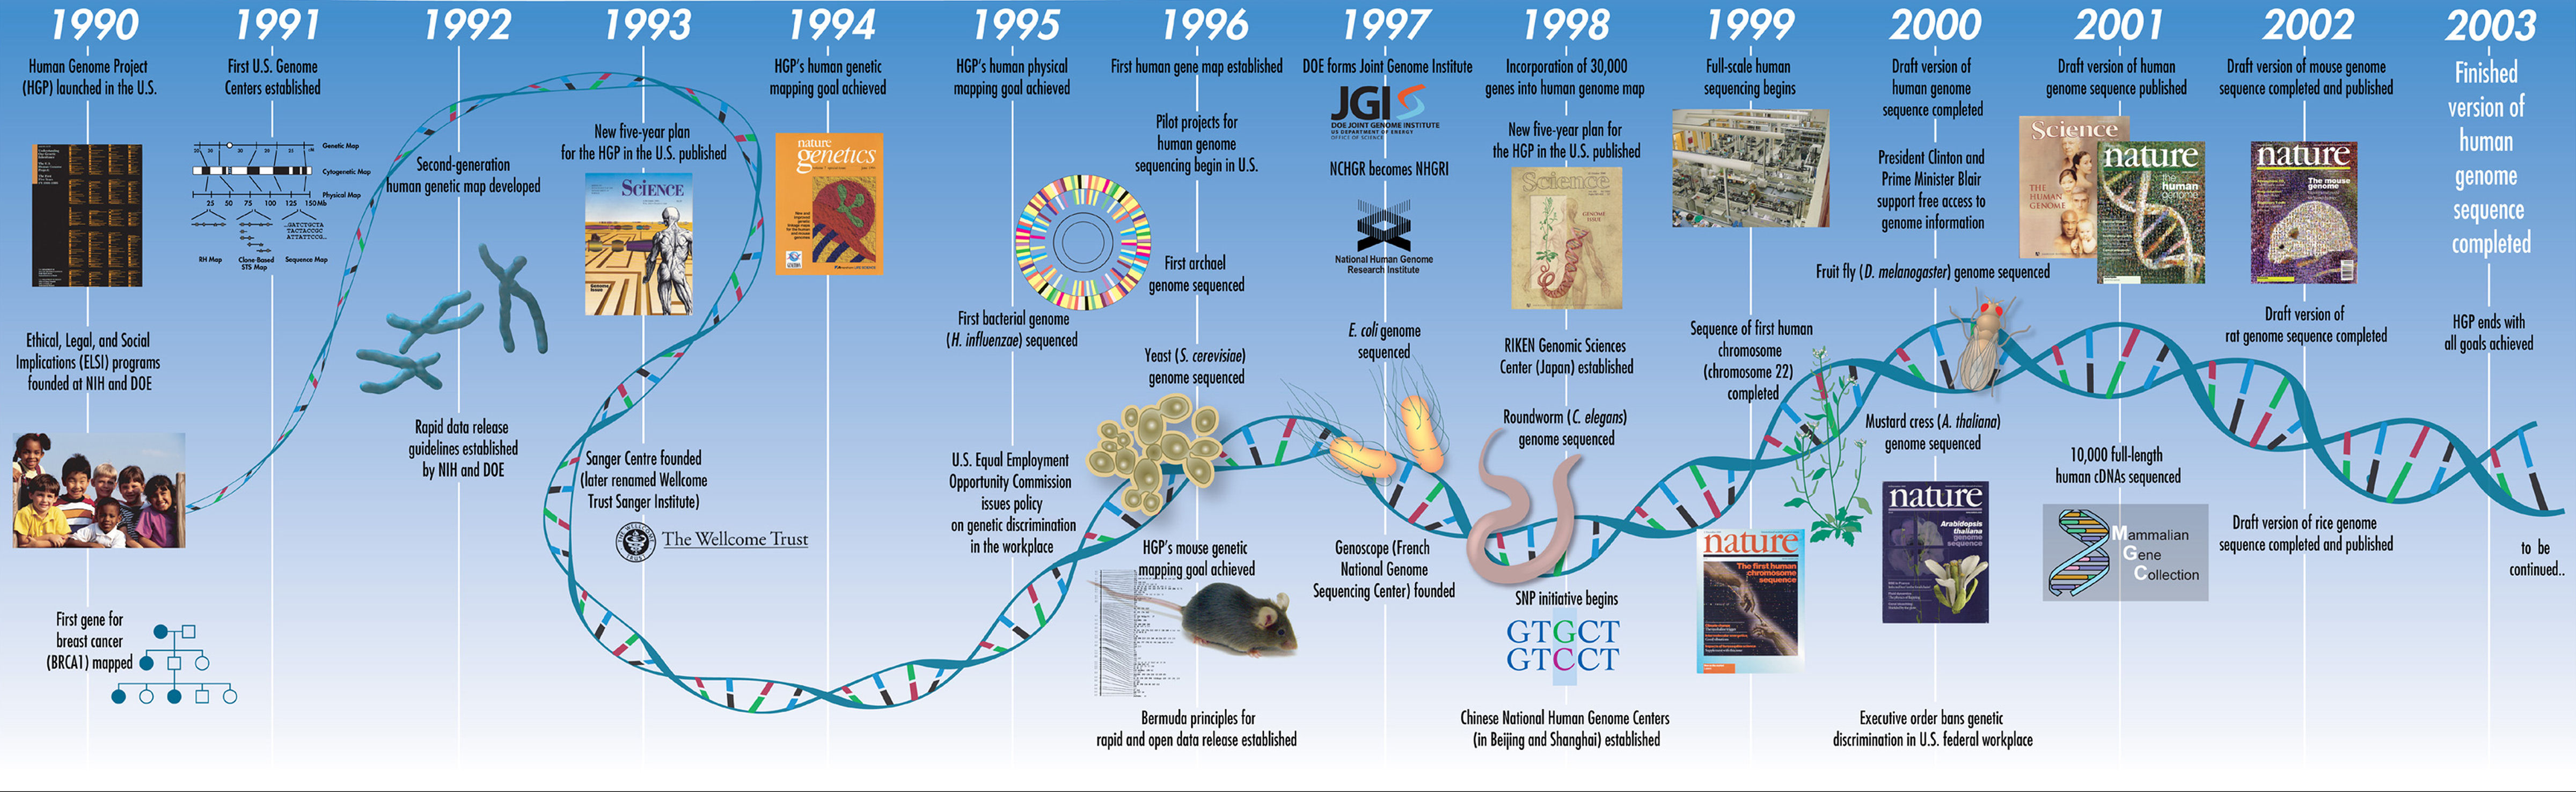 Proyecto Genoma Humano Acontecimientos Timeline Timetoast Timelines Kulturaupice 